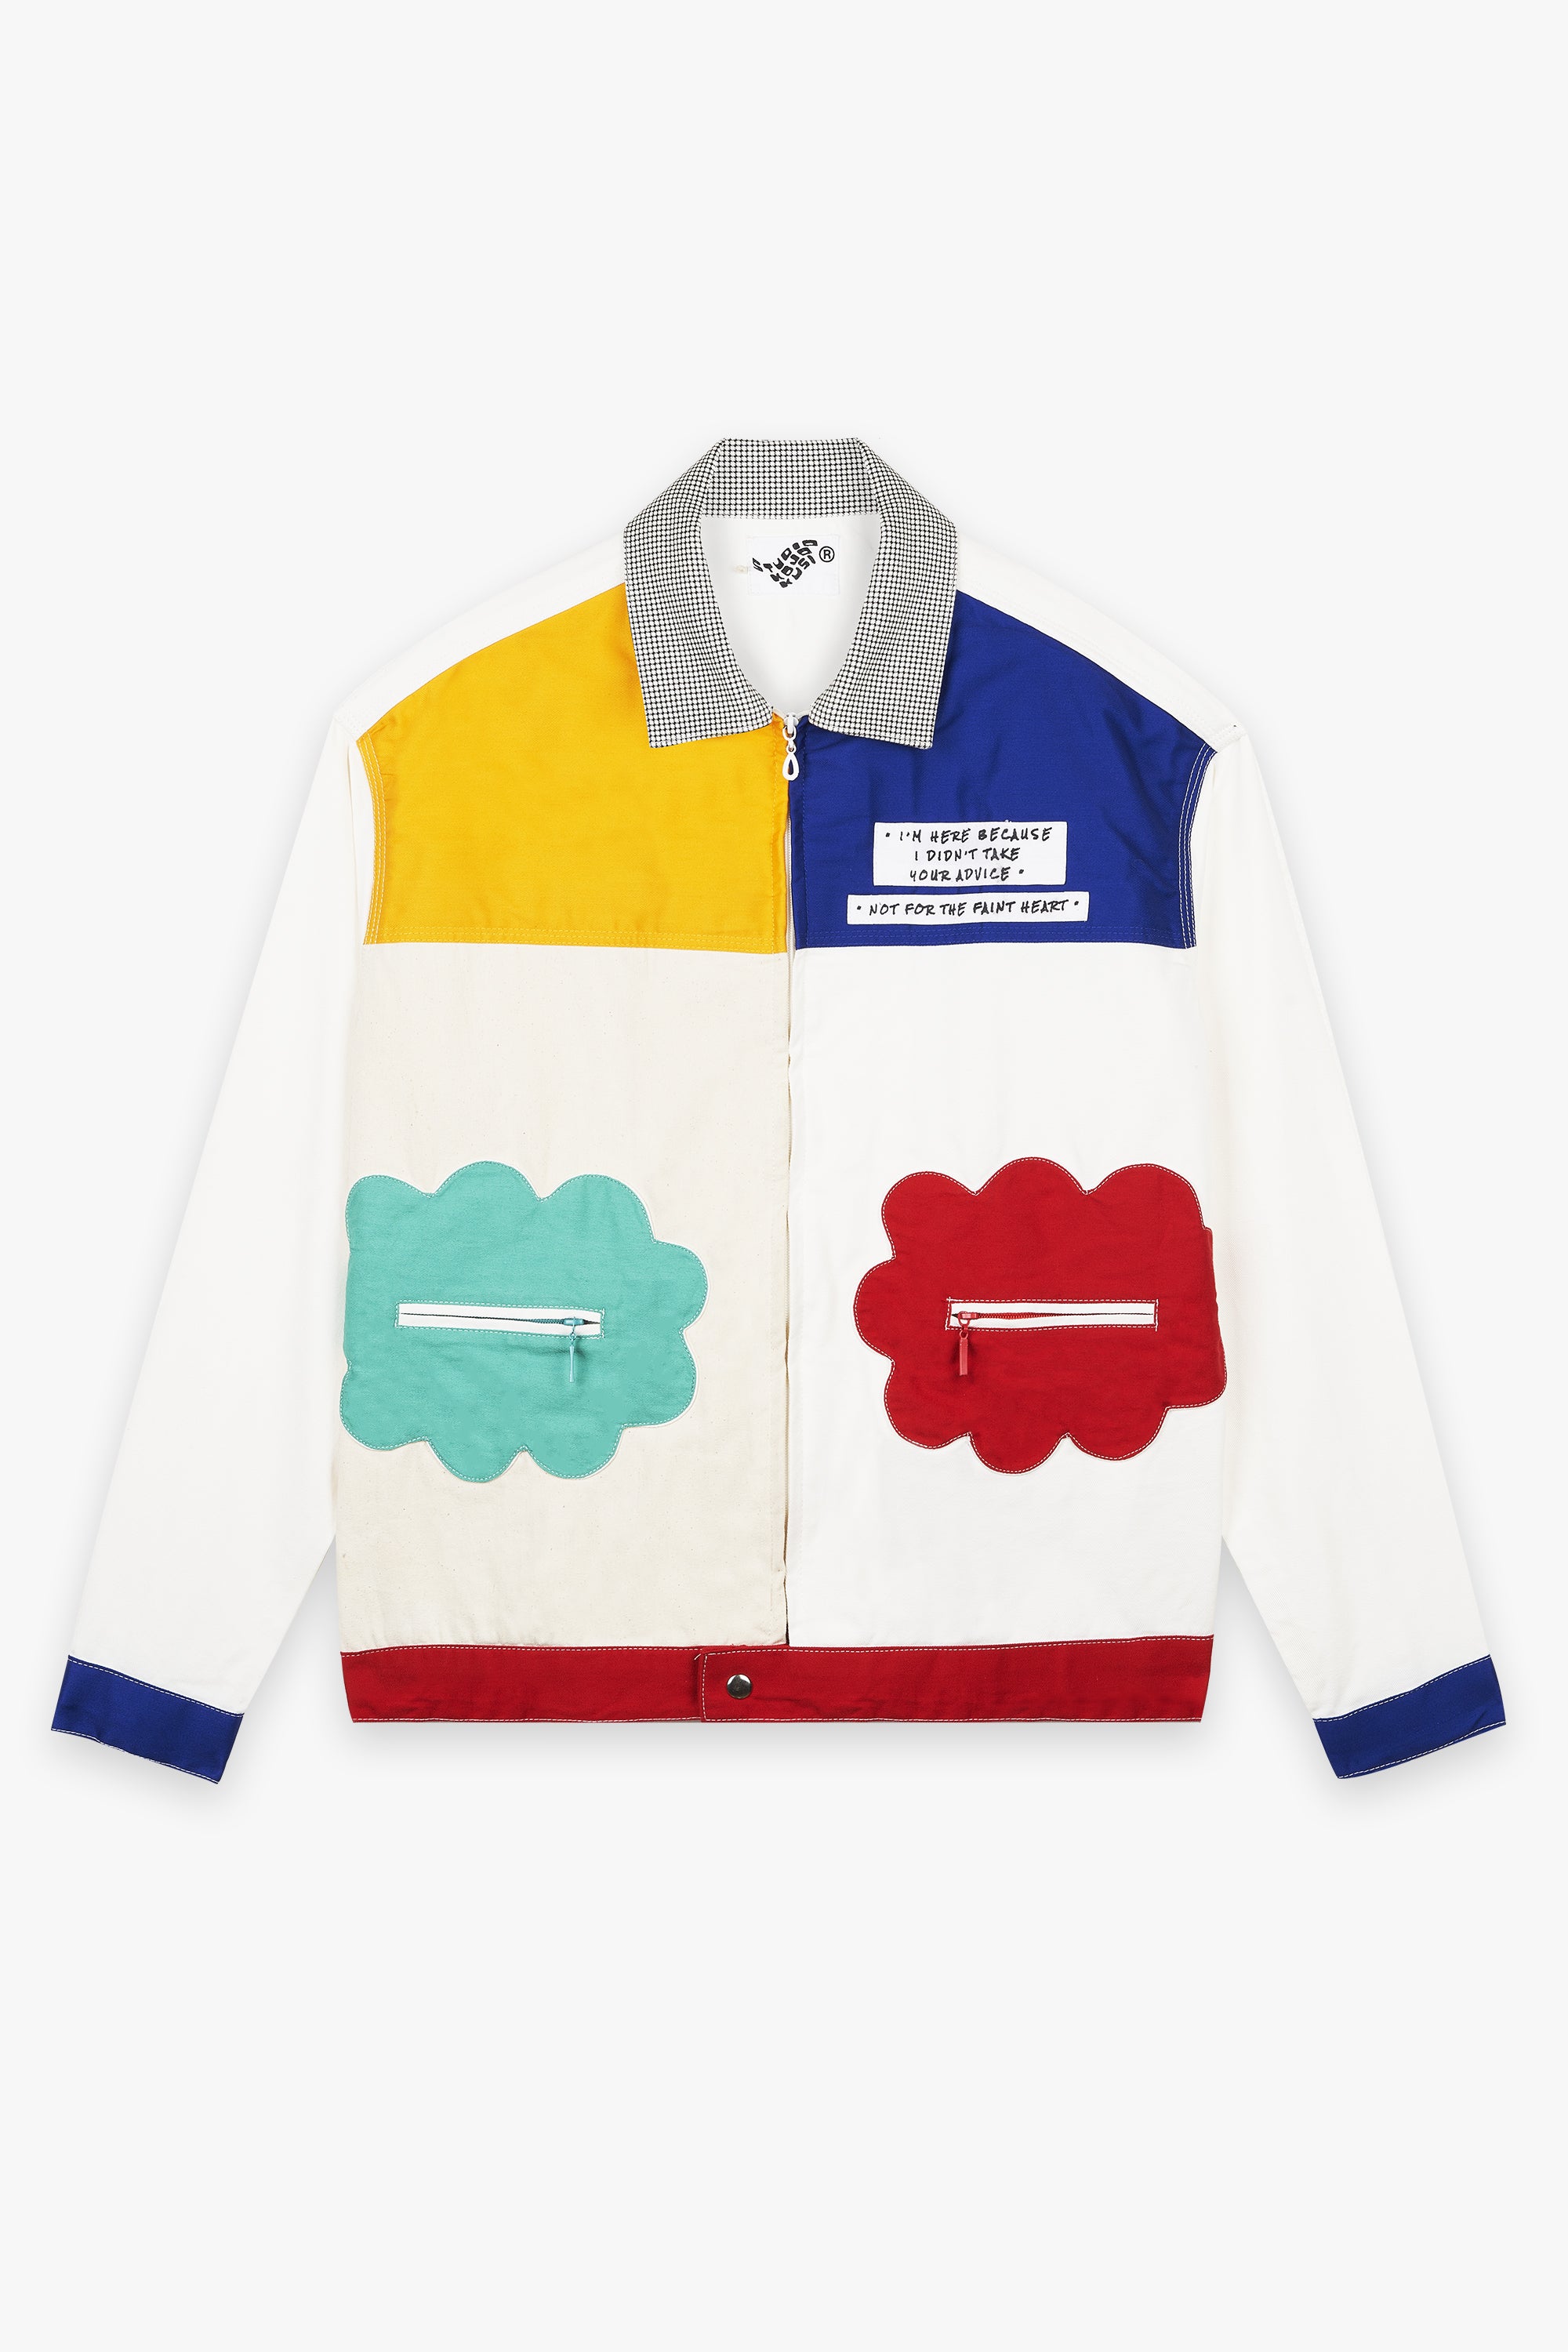 Color Blocked Jacket